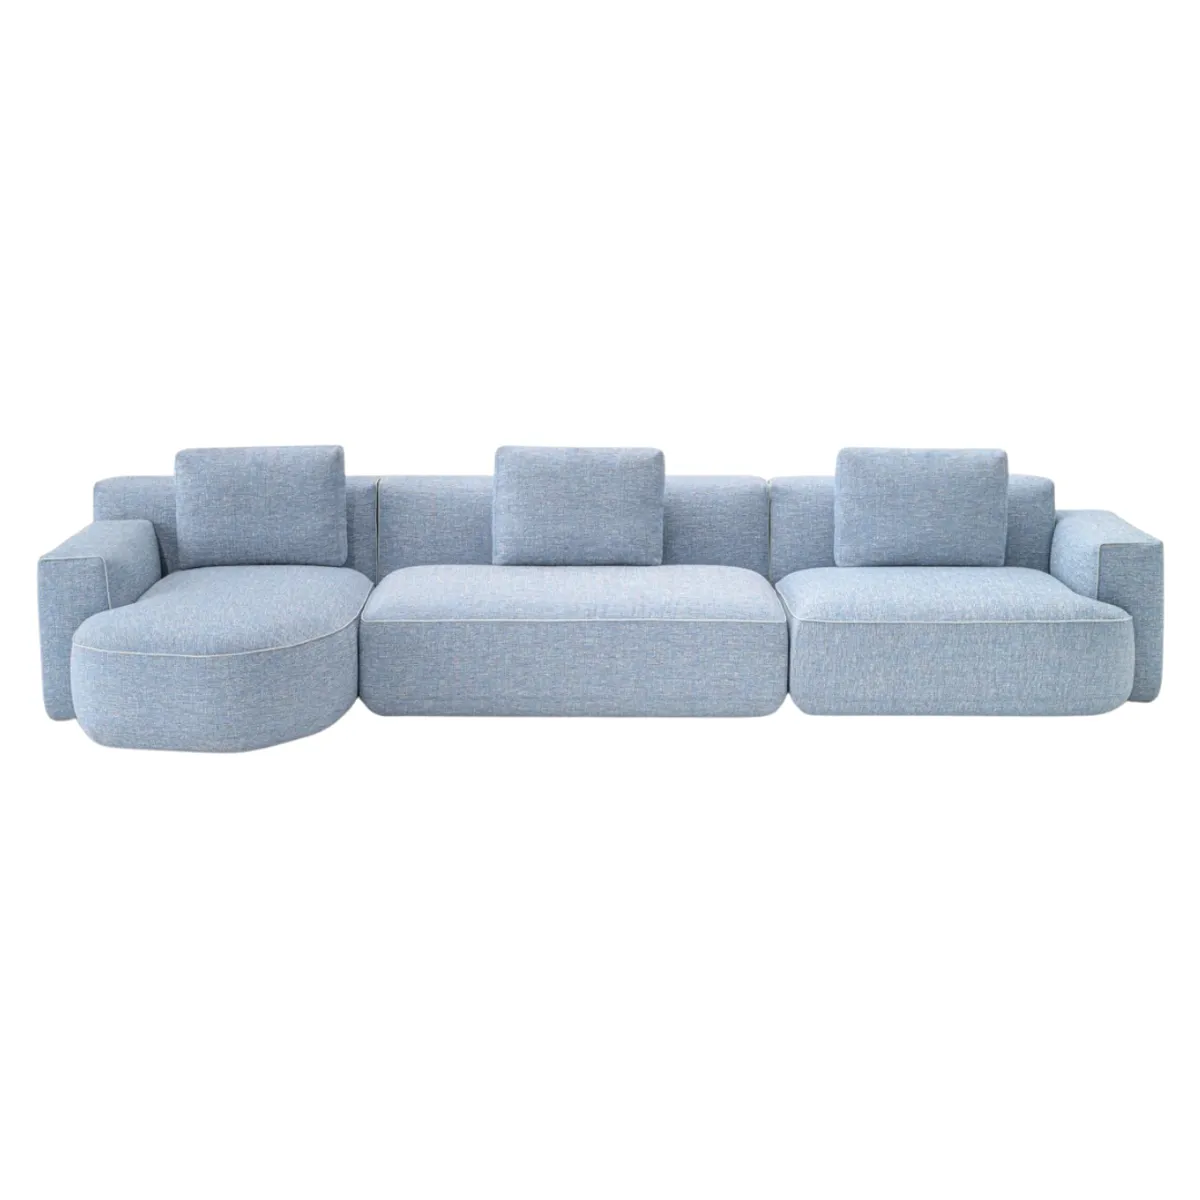 Jeff modular sofa 1